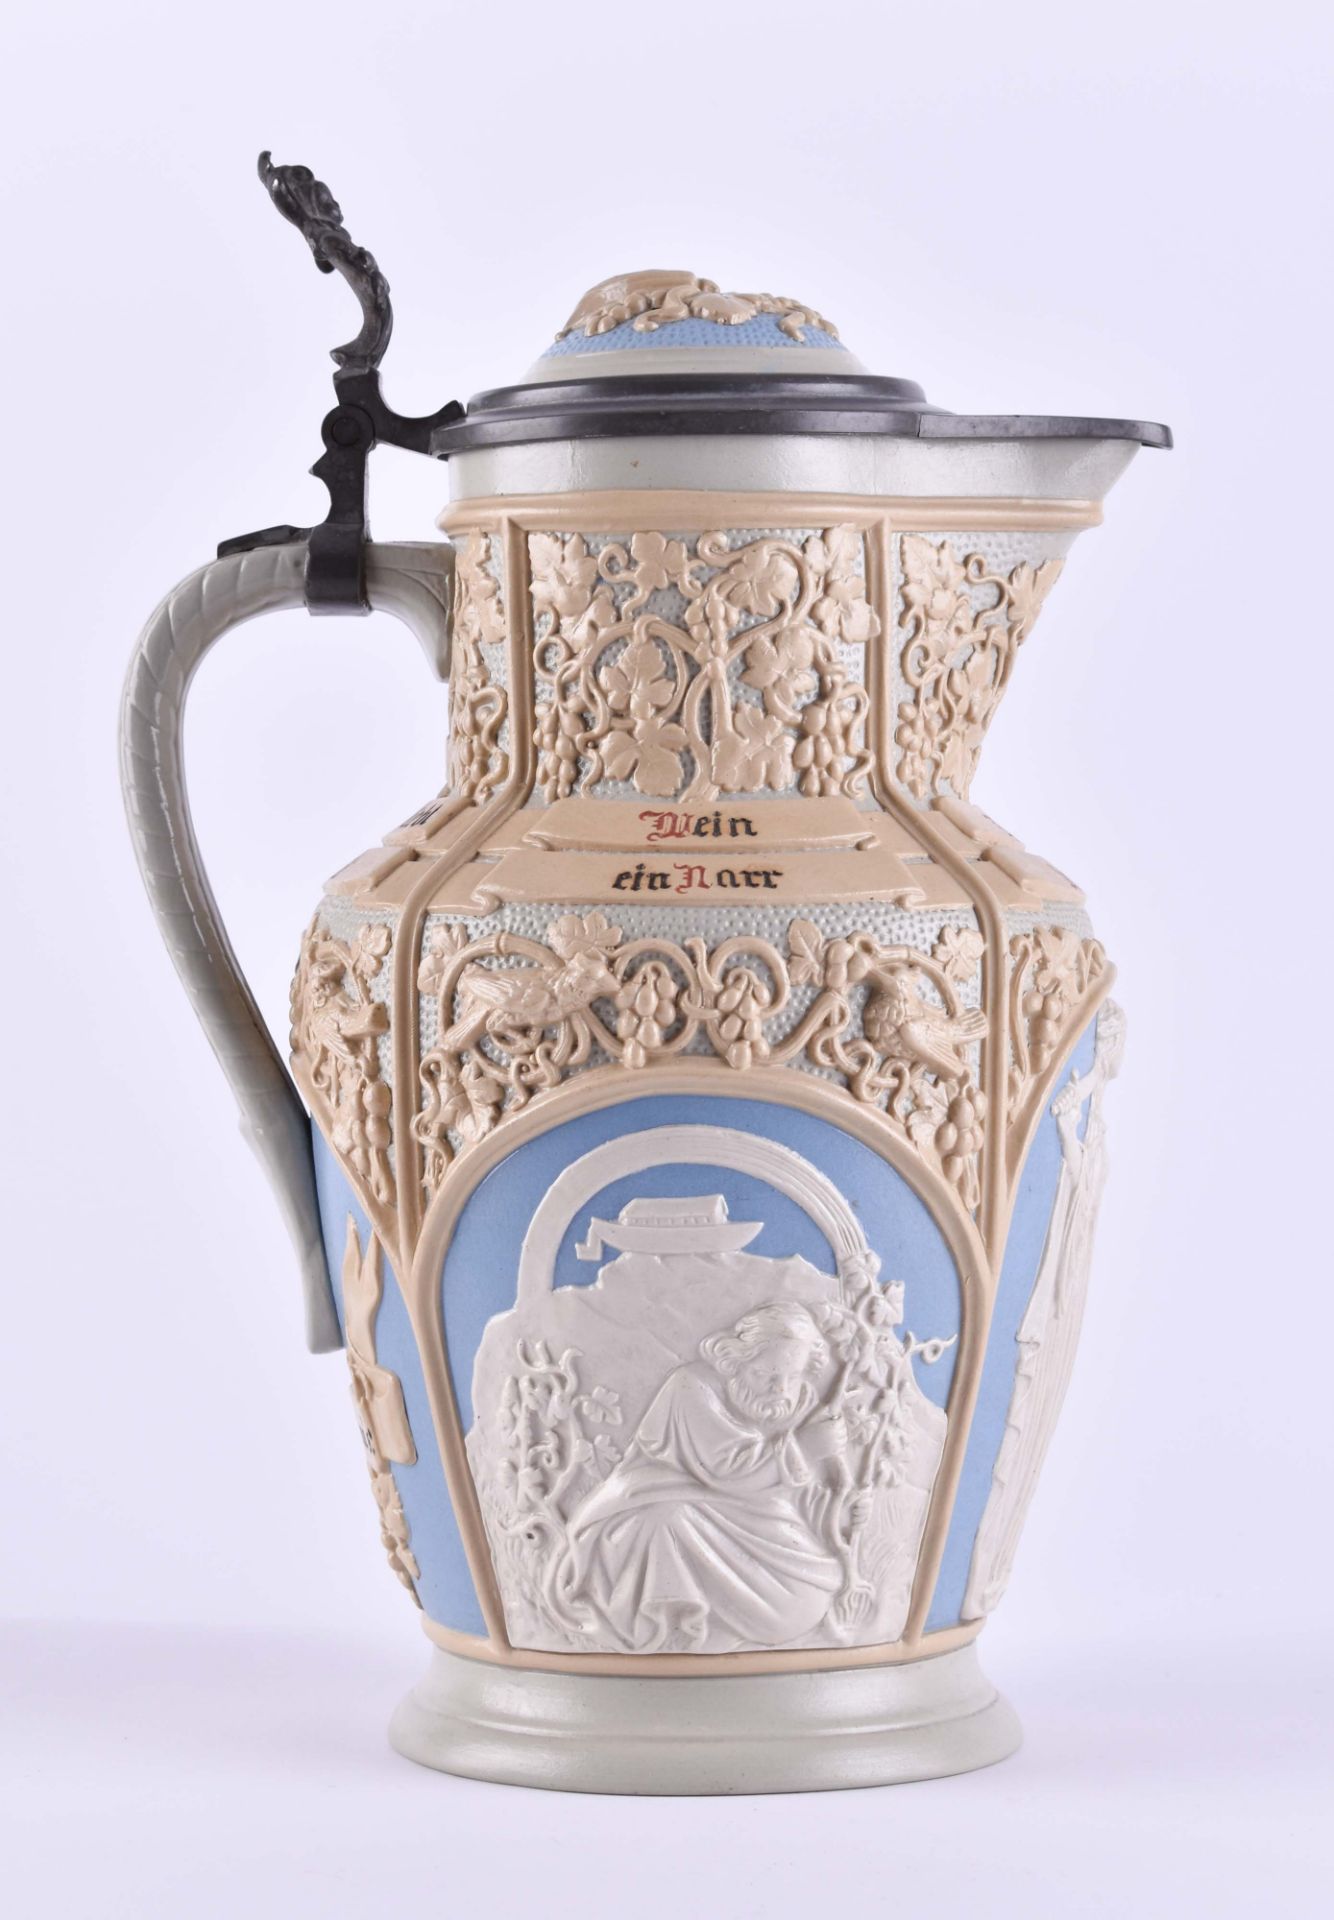 Villeroy & Boch Mettlach wine jug around 1890 / 1900height 30 cm, capacity 2.5 lVilleroy & Boch